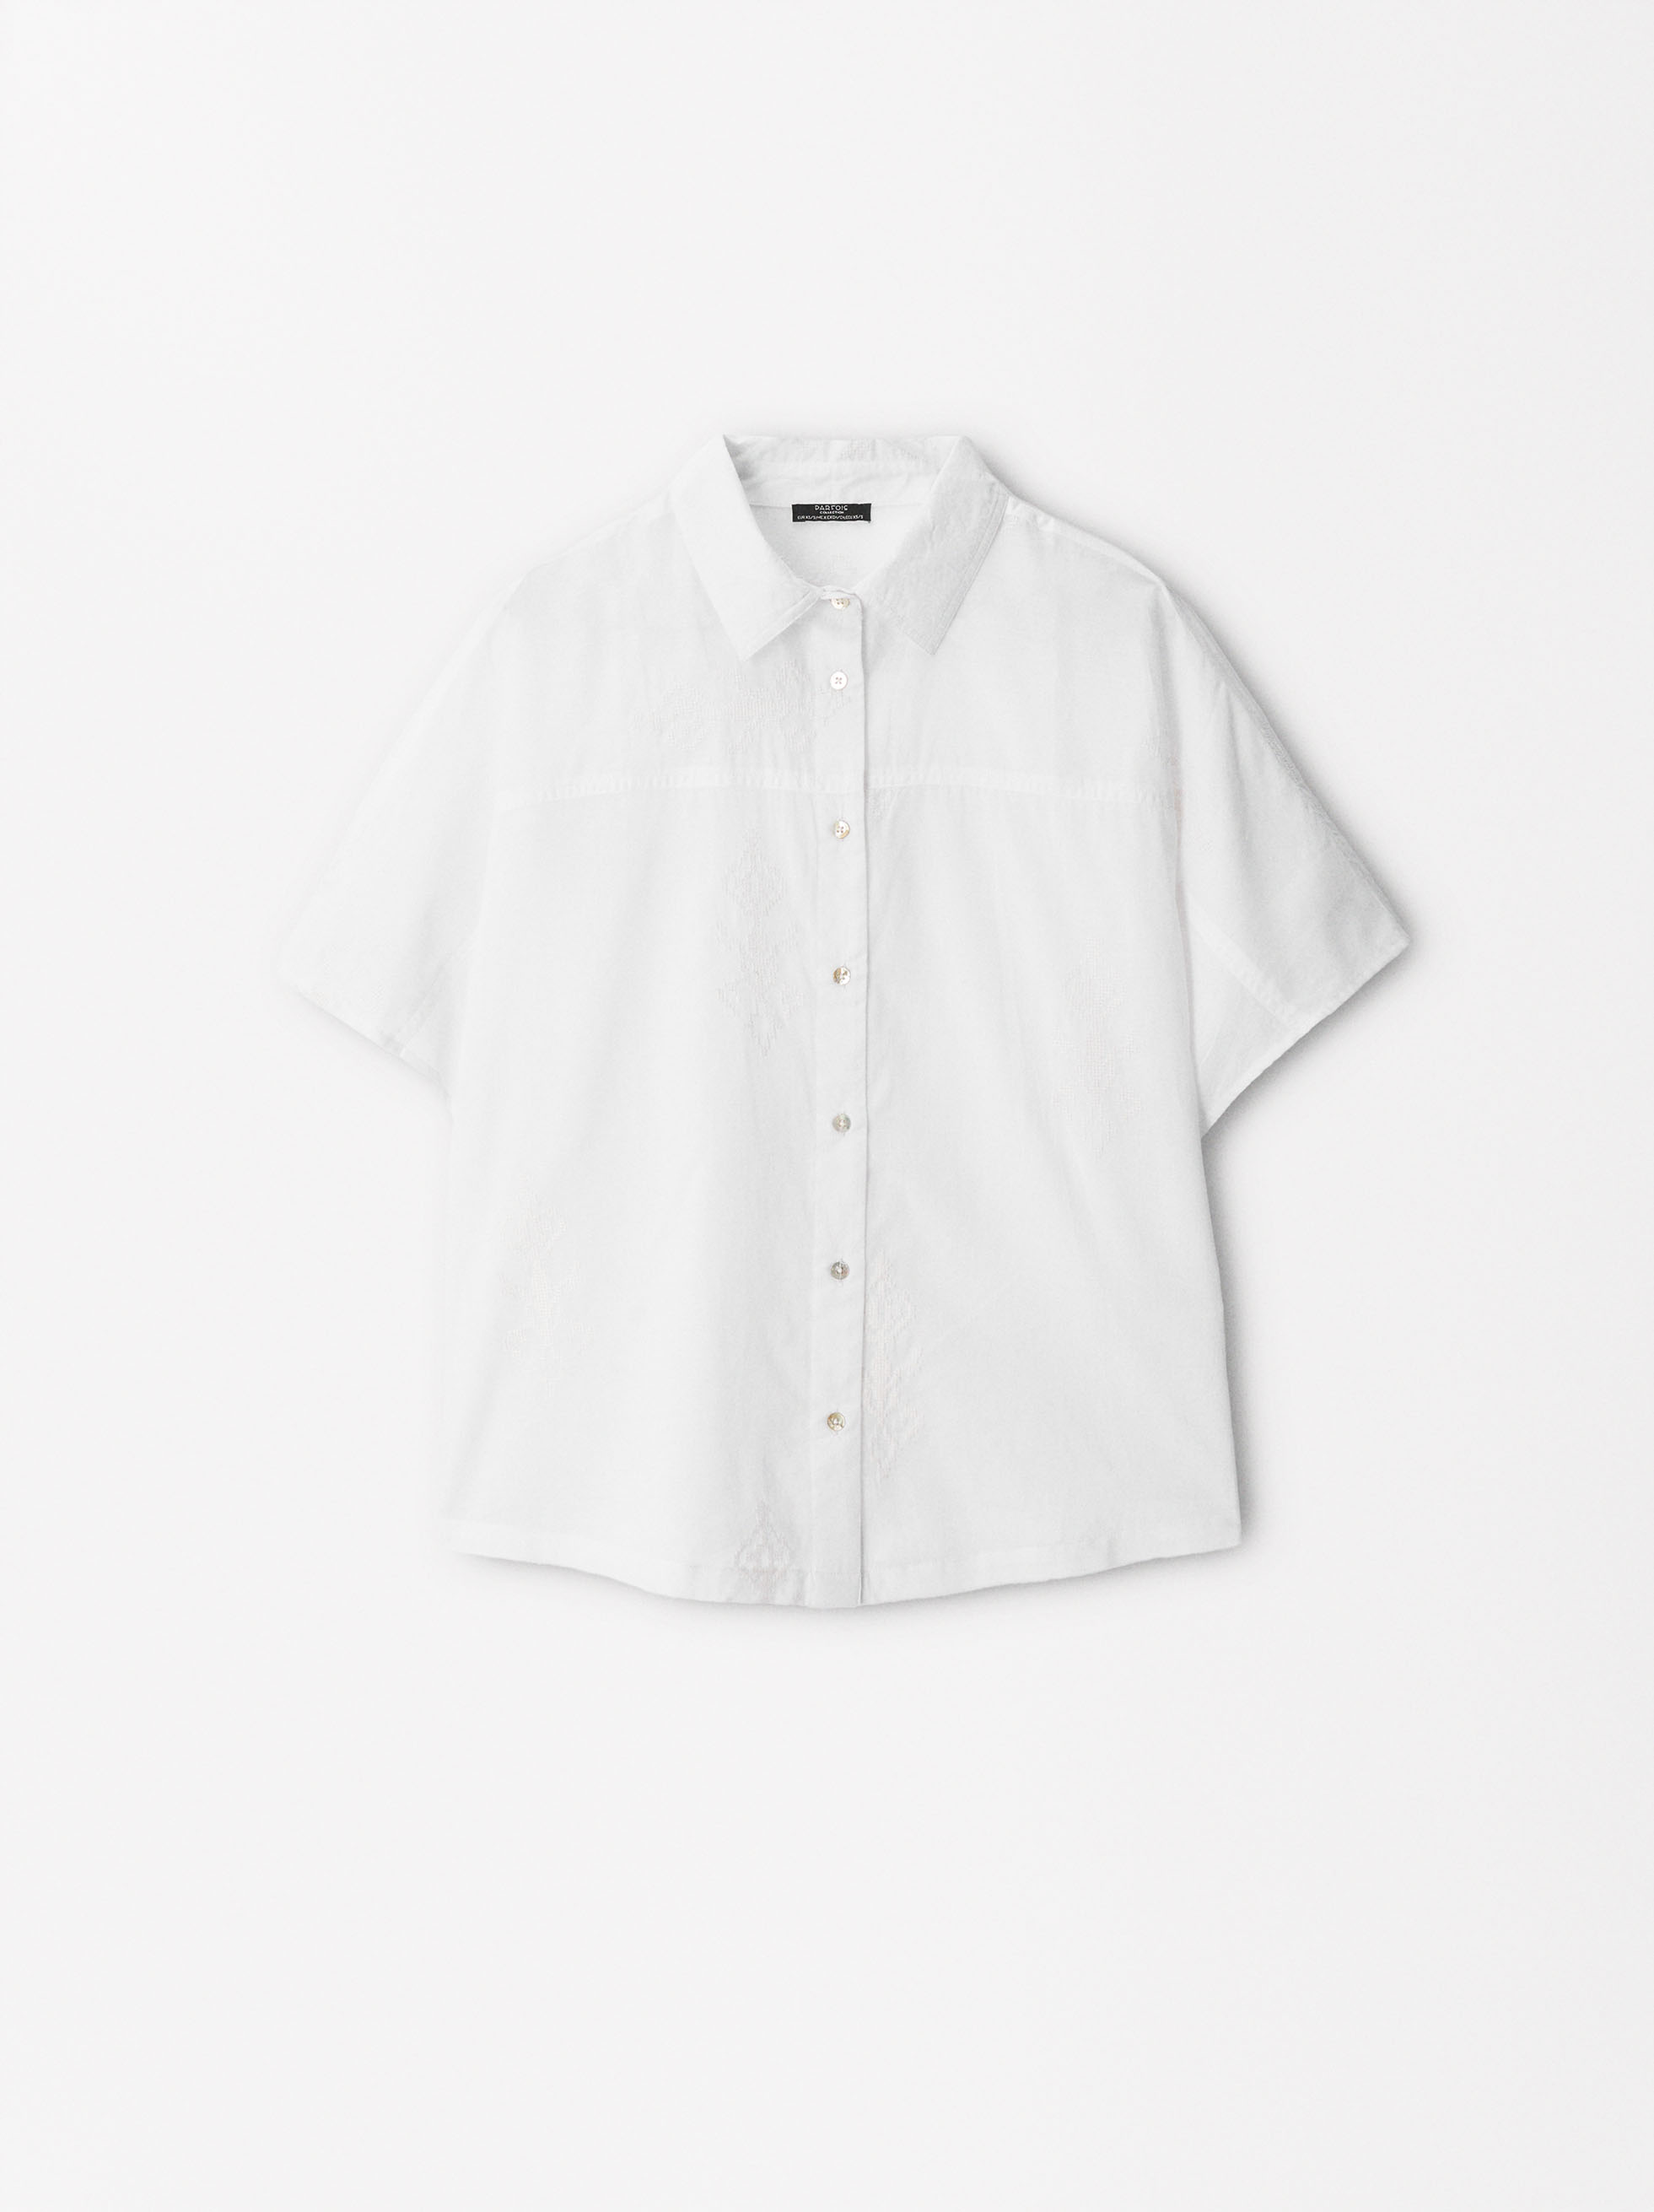 100% Cotton Shirt image number 1.0